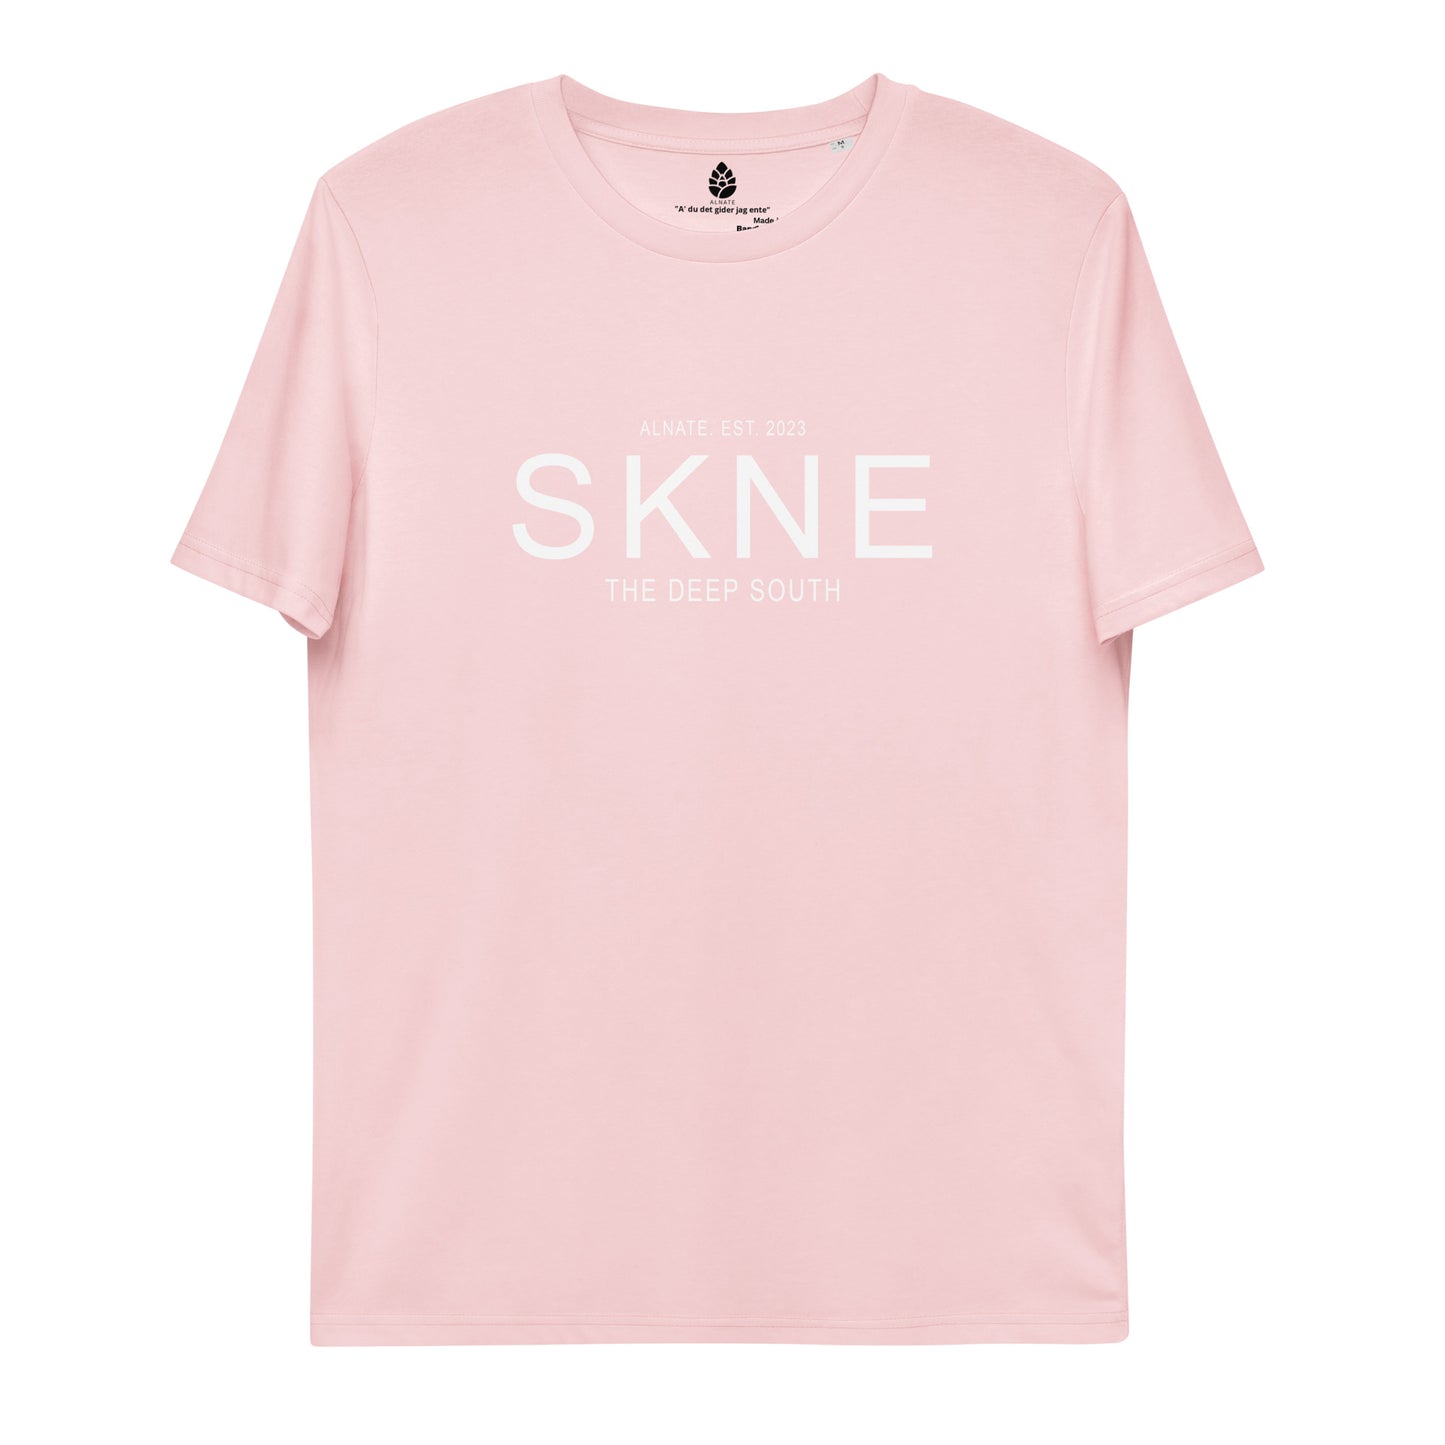 T-shirt - SKNE